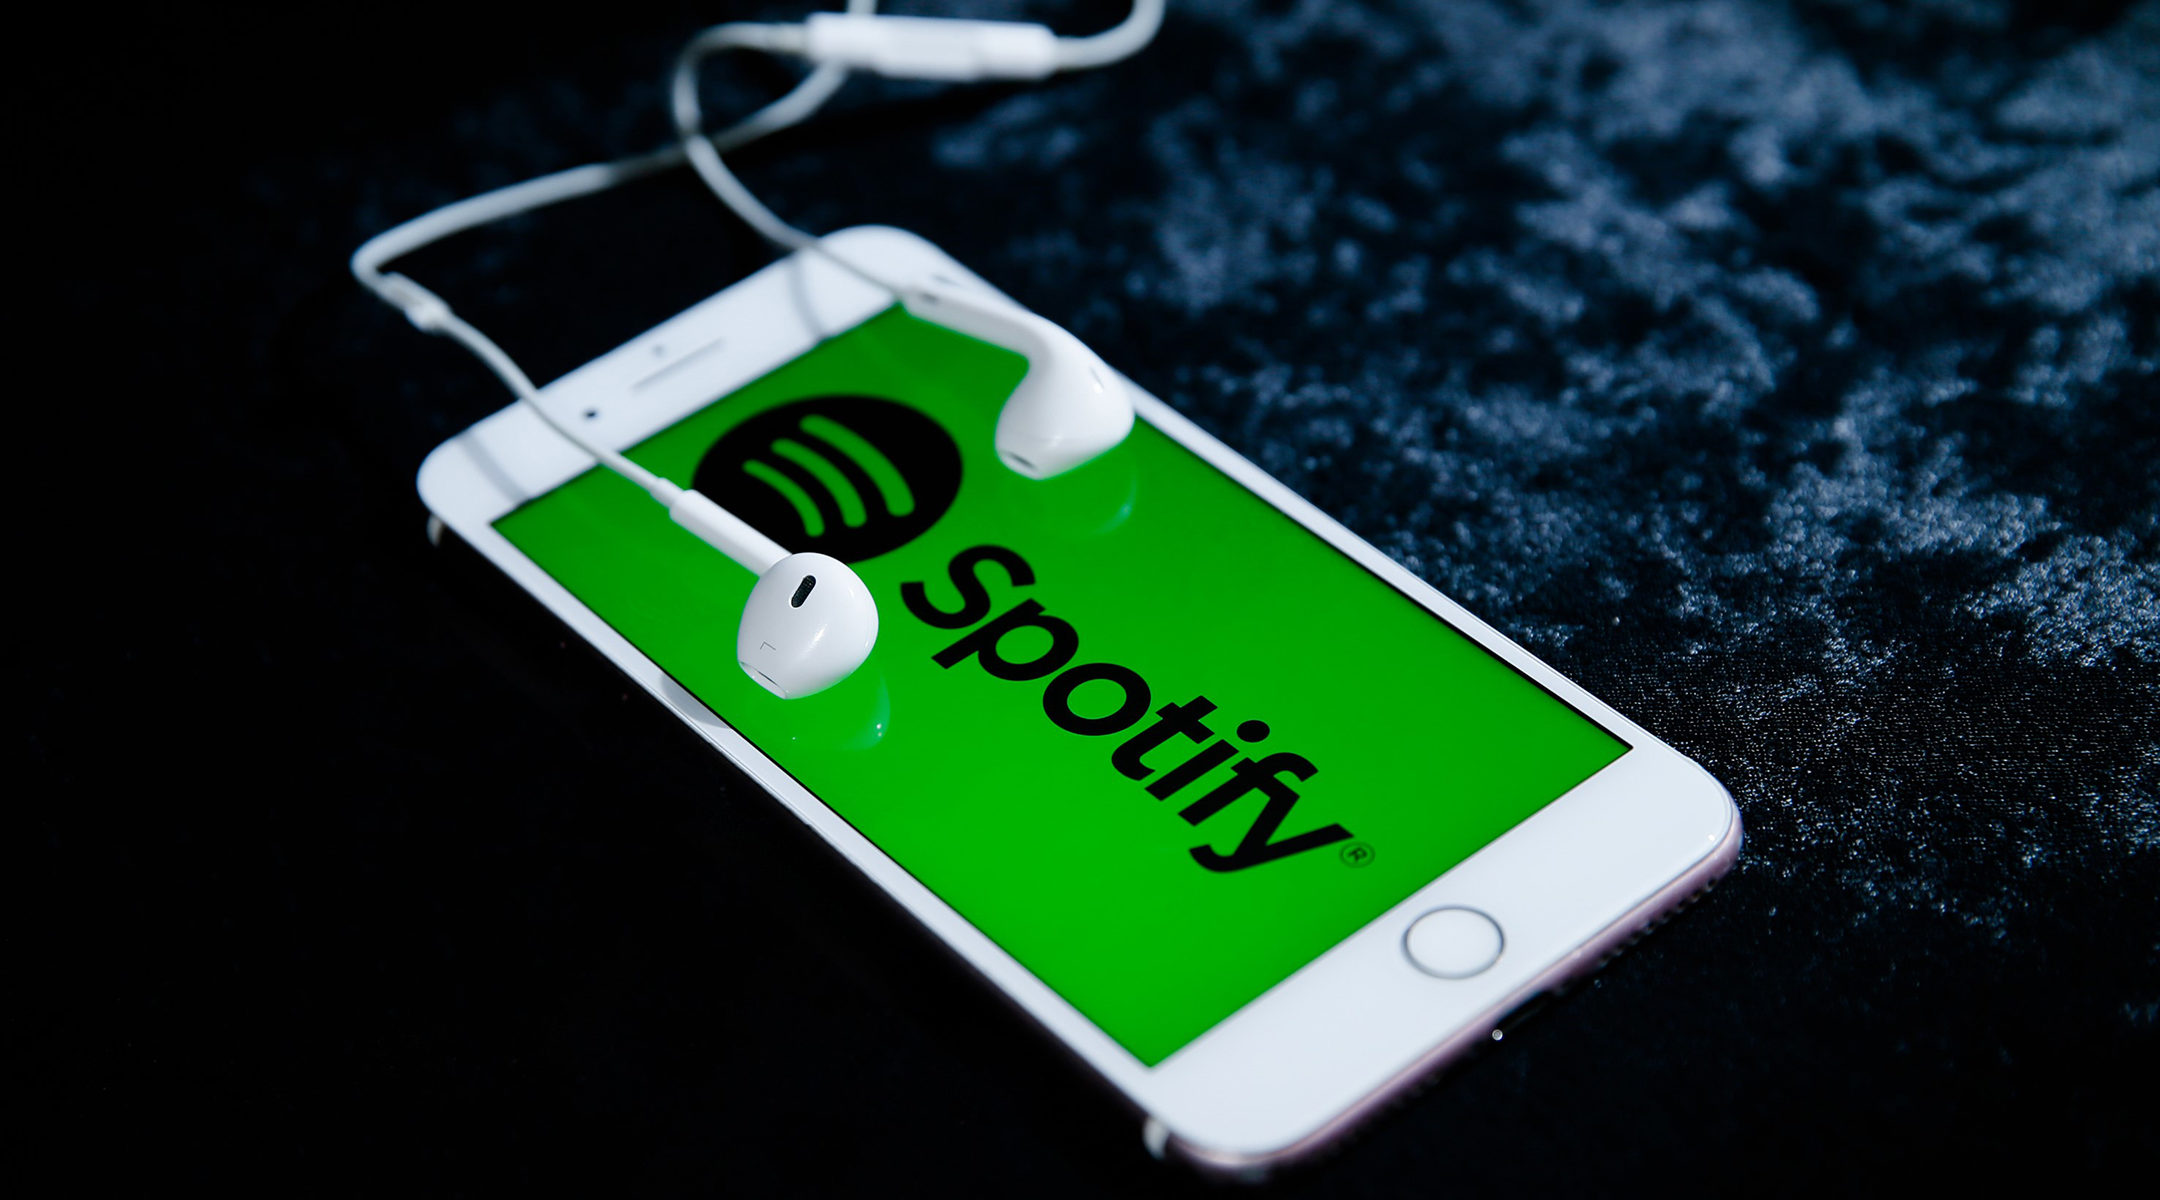 A cellphone displaying the Spotify logo. (Mahmut Serdar Alakus/Anadolu Agency/Getty Images)